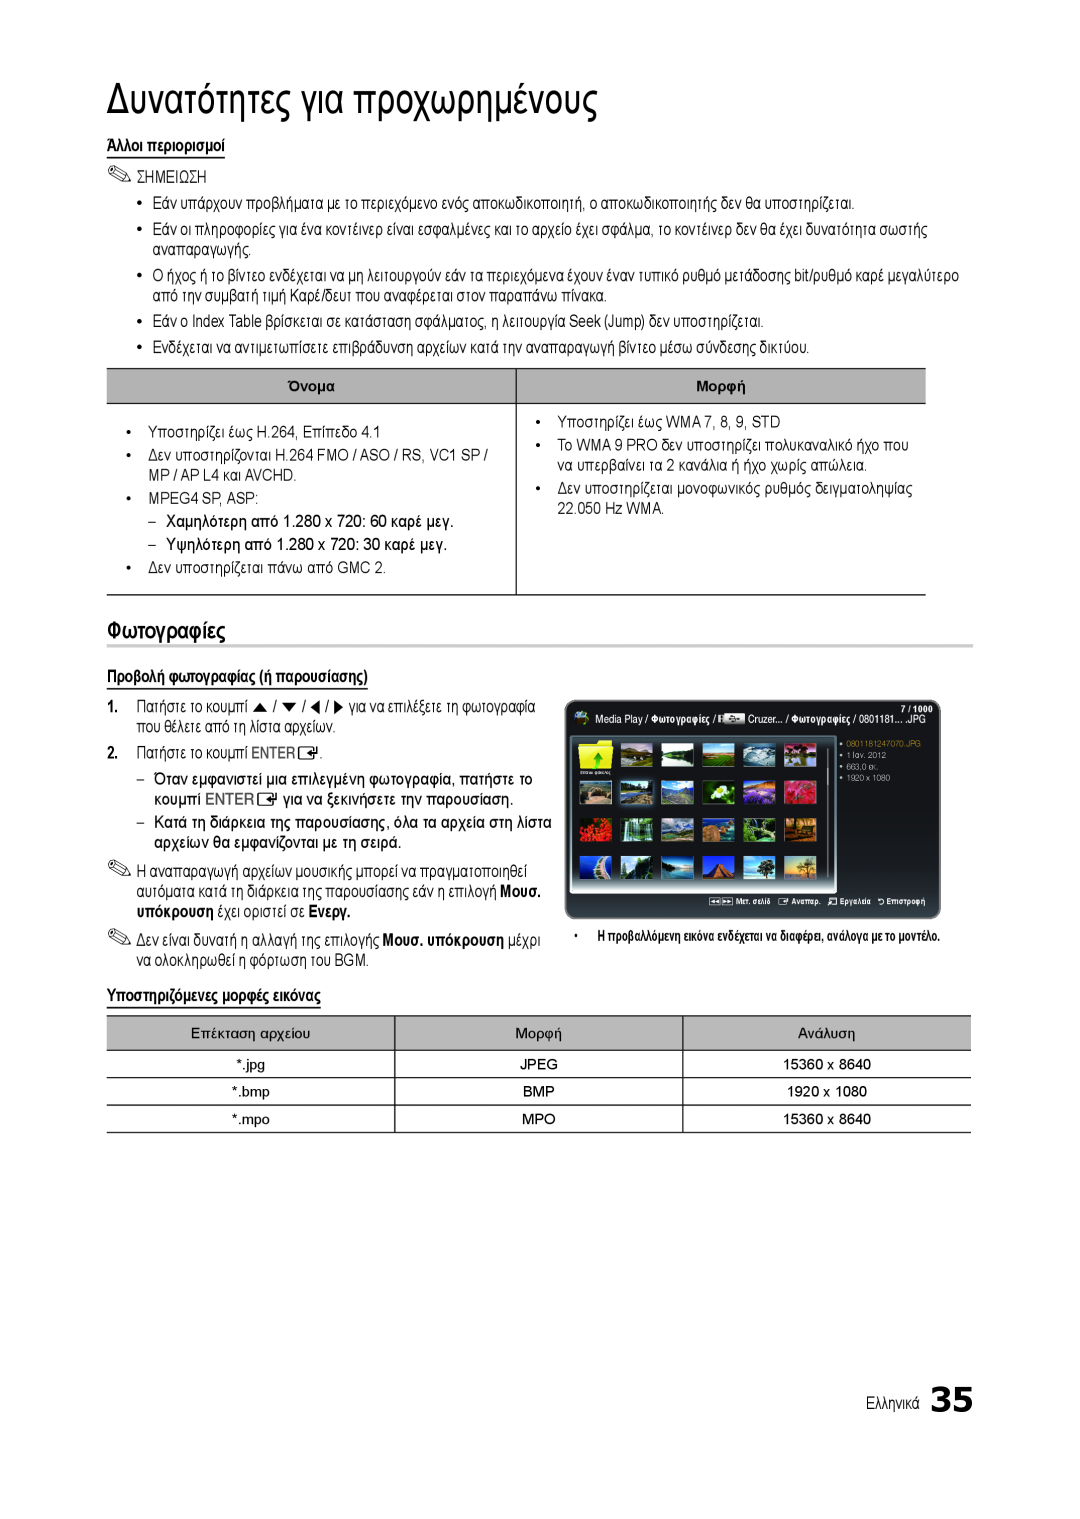 Samsung LT19B300EW/EN Φωτογραφίες, Δυνατότητες για προχωρημένους, Άλλοι περιορισμοί, Προβολή φωτογραφίας ή παρουσίασης 